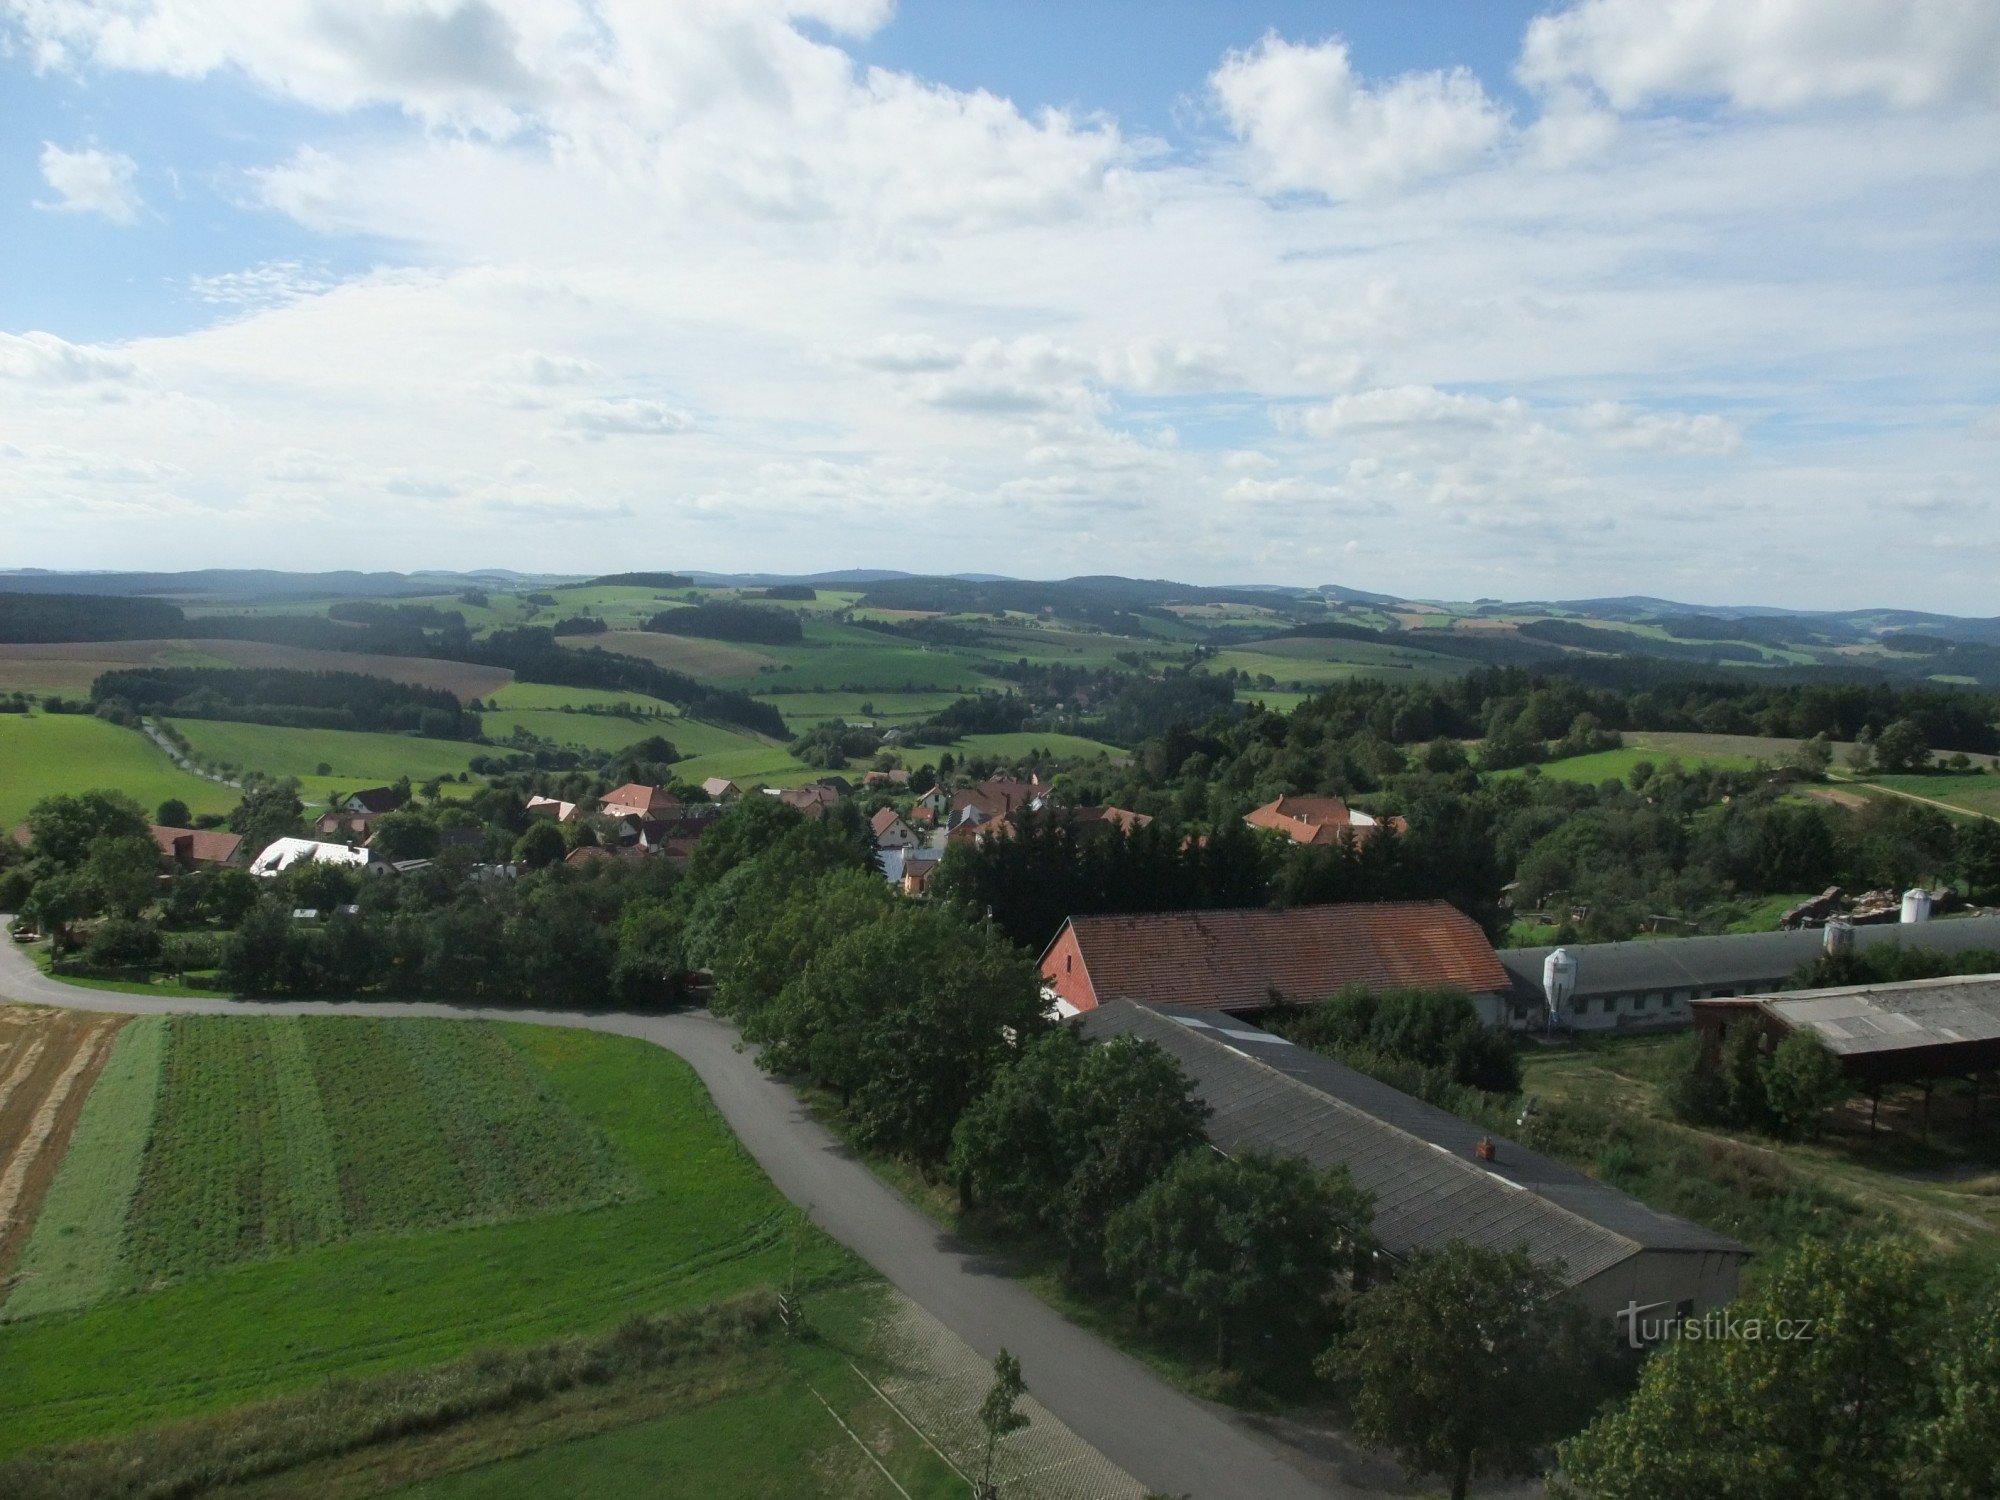 La vista dalla torre di osservazione di Karasín